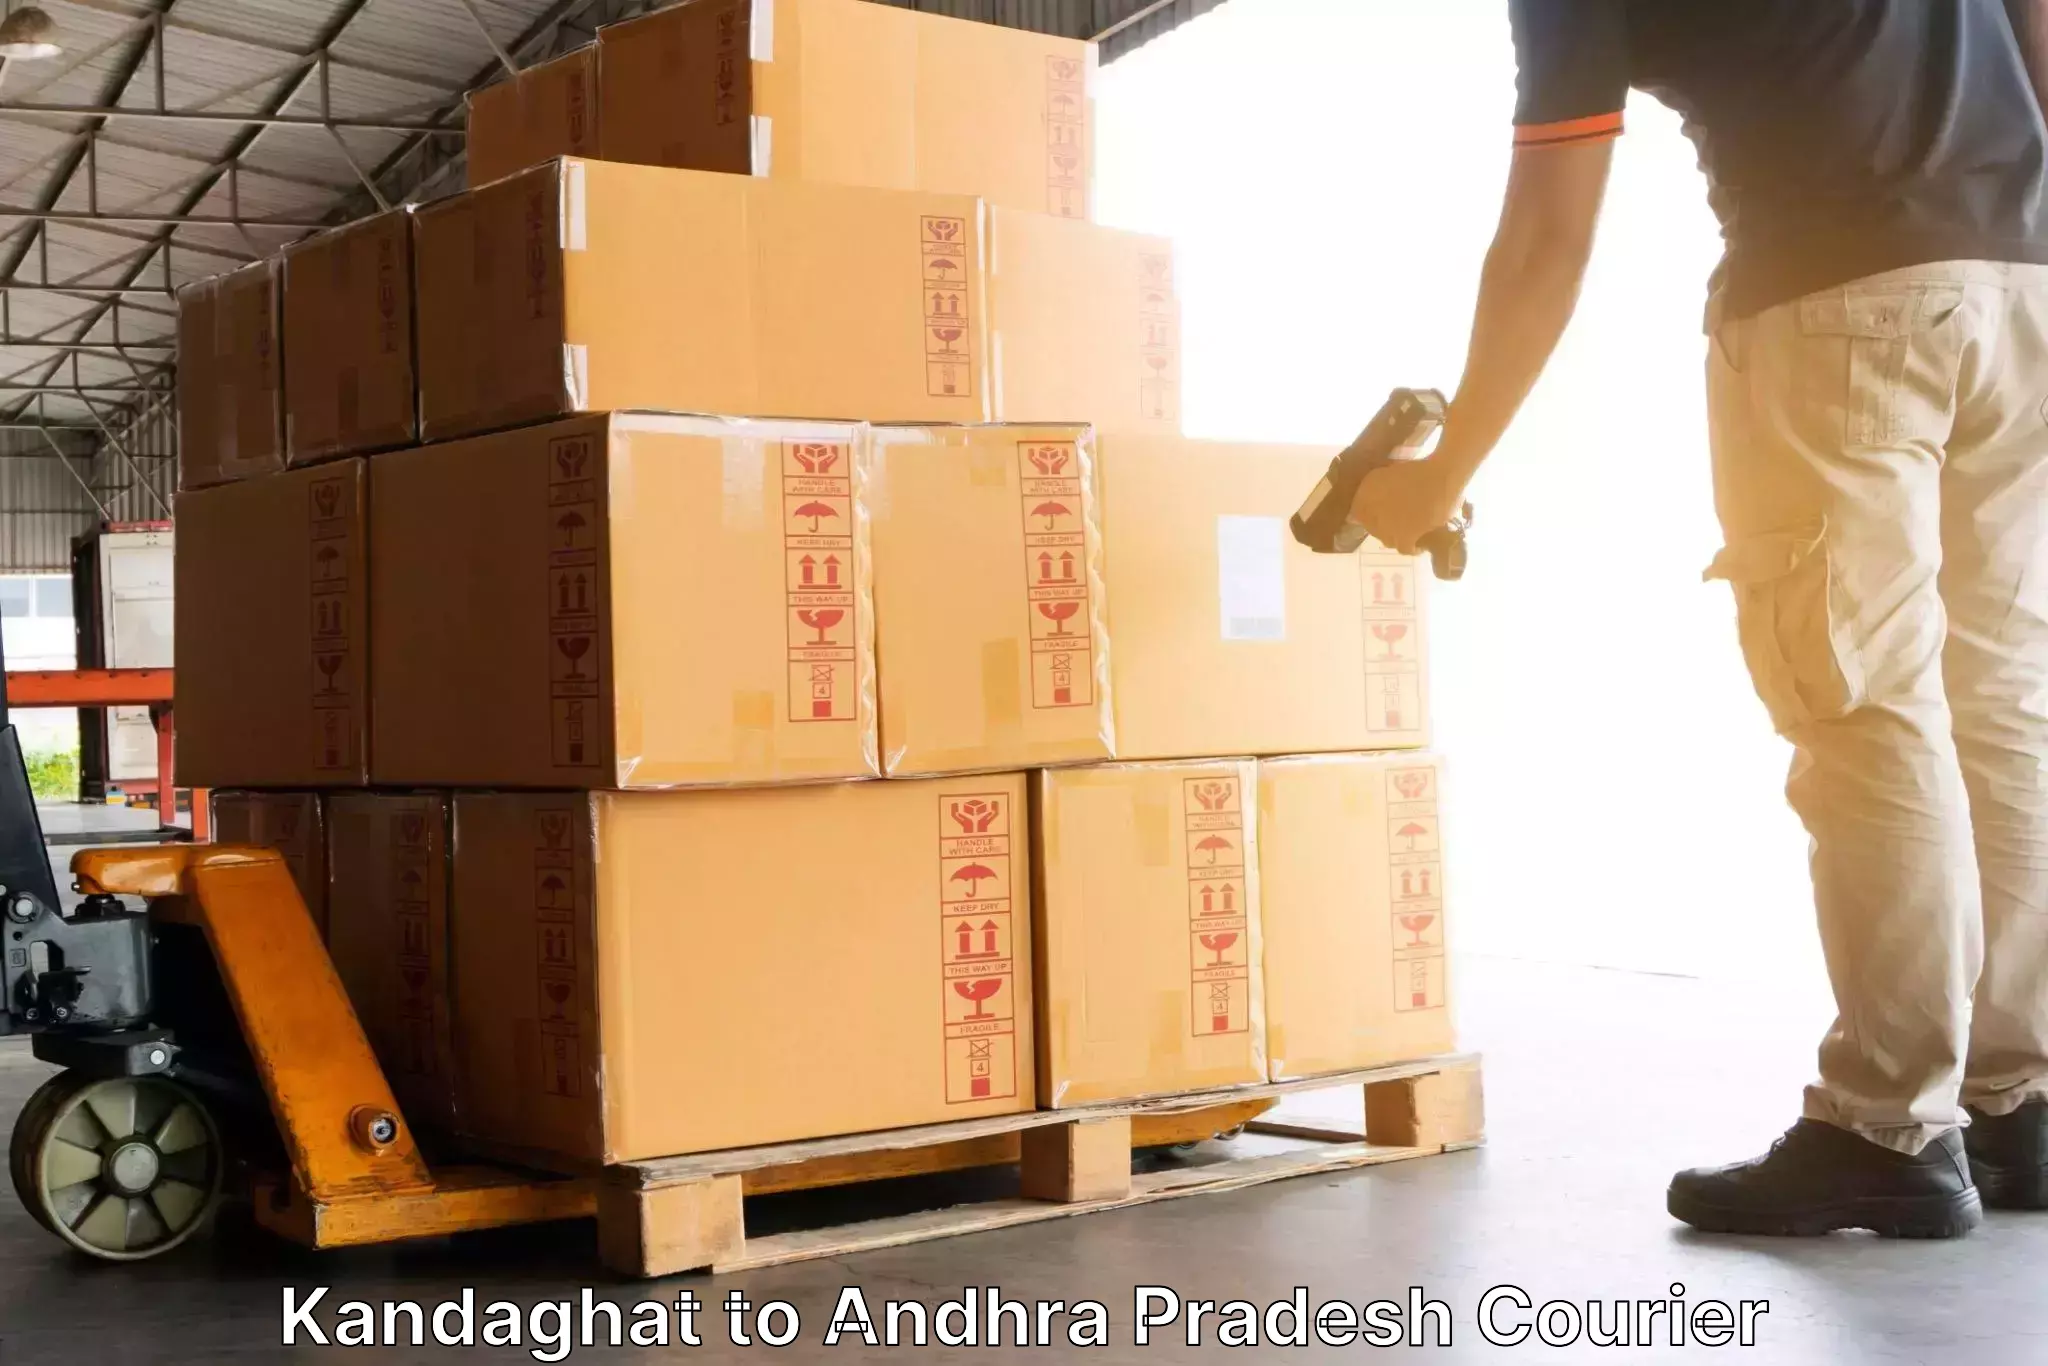 Professional courier handling in Kandaghat to Yerravaram